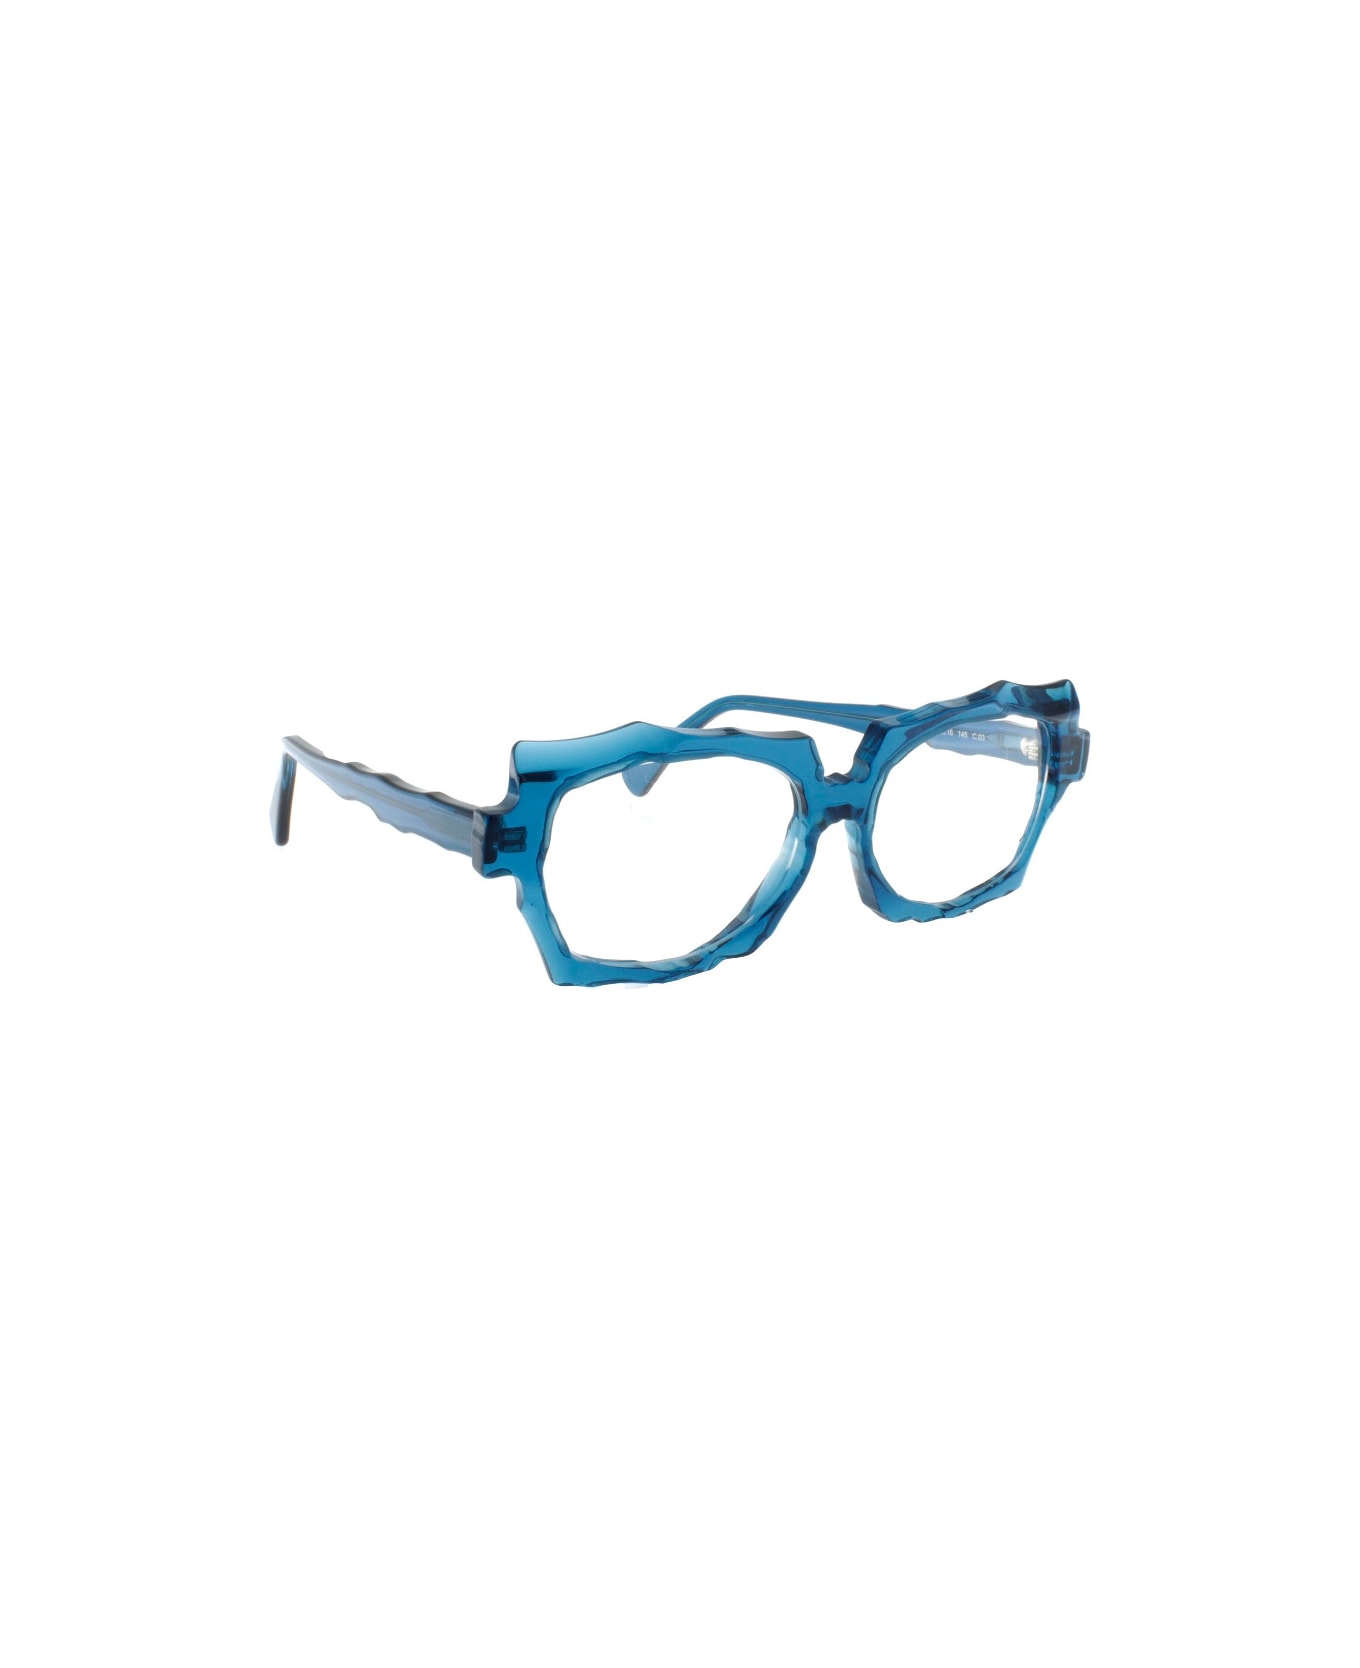 Liò Occhiali IVP 1192 C03 Glasses - Blu